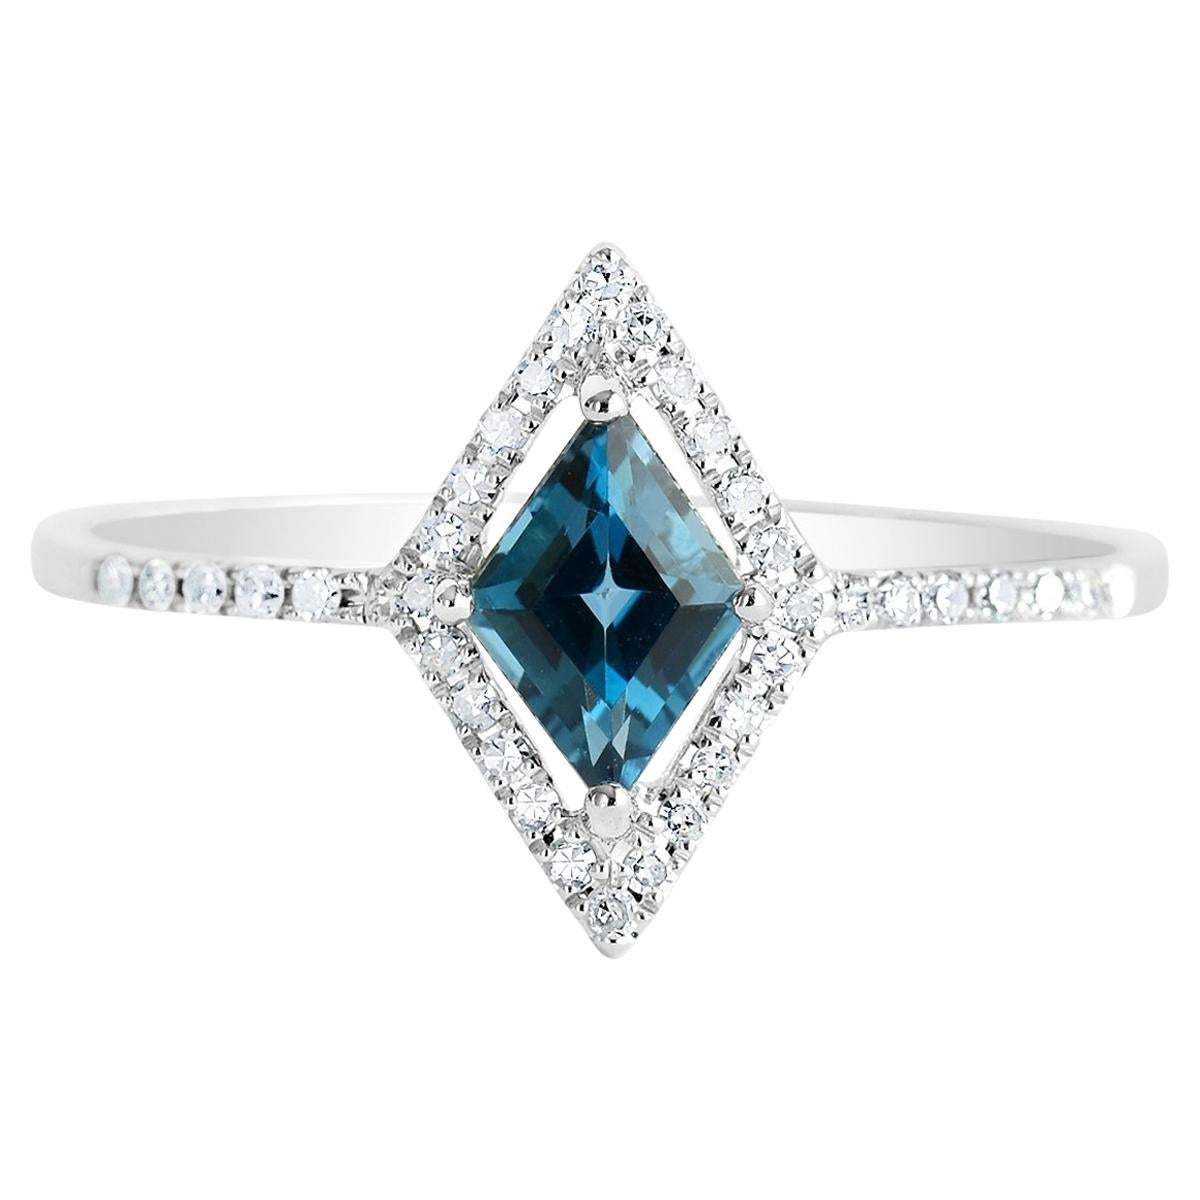 Blue Topaz Diamond Ring, Finest London Blue Topaz + 34 Diamonds Solid White Gold